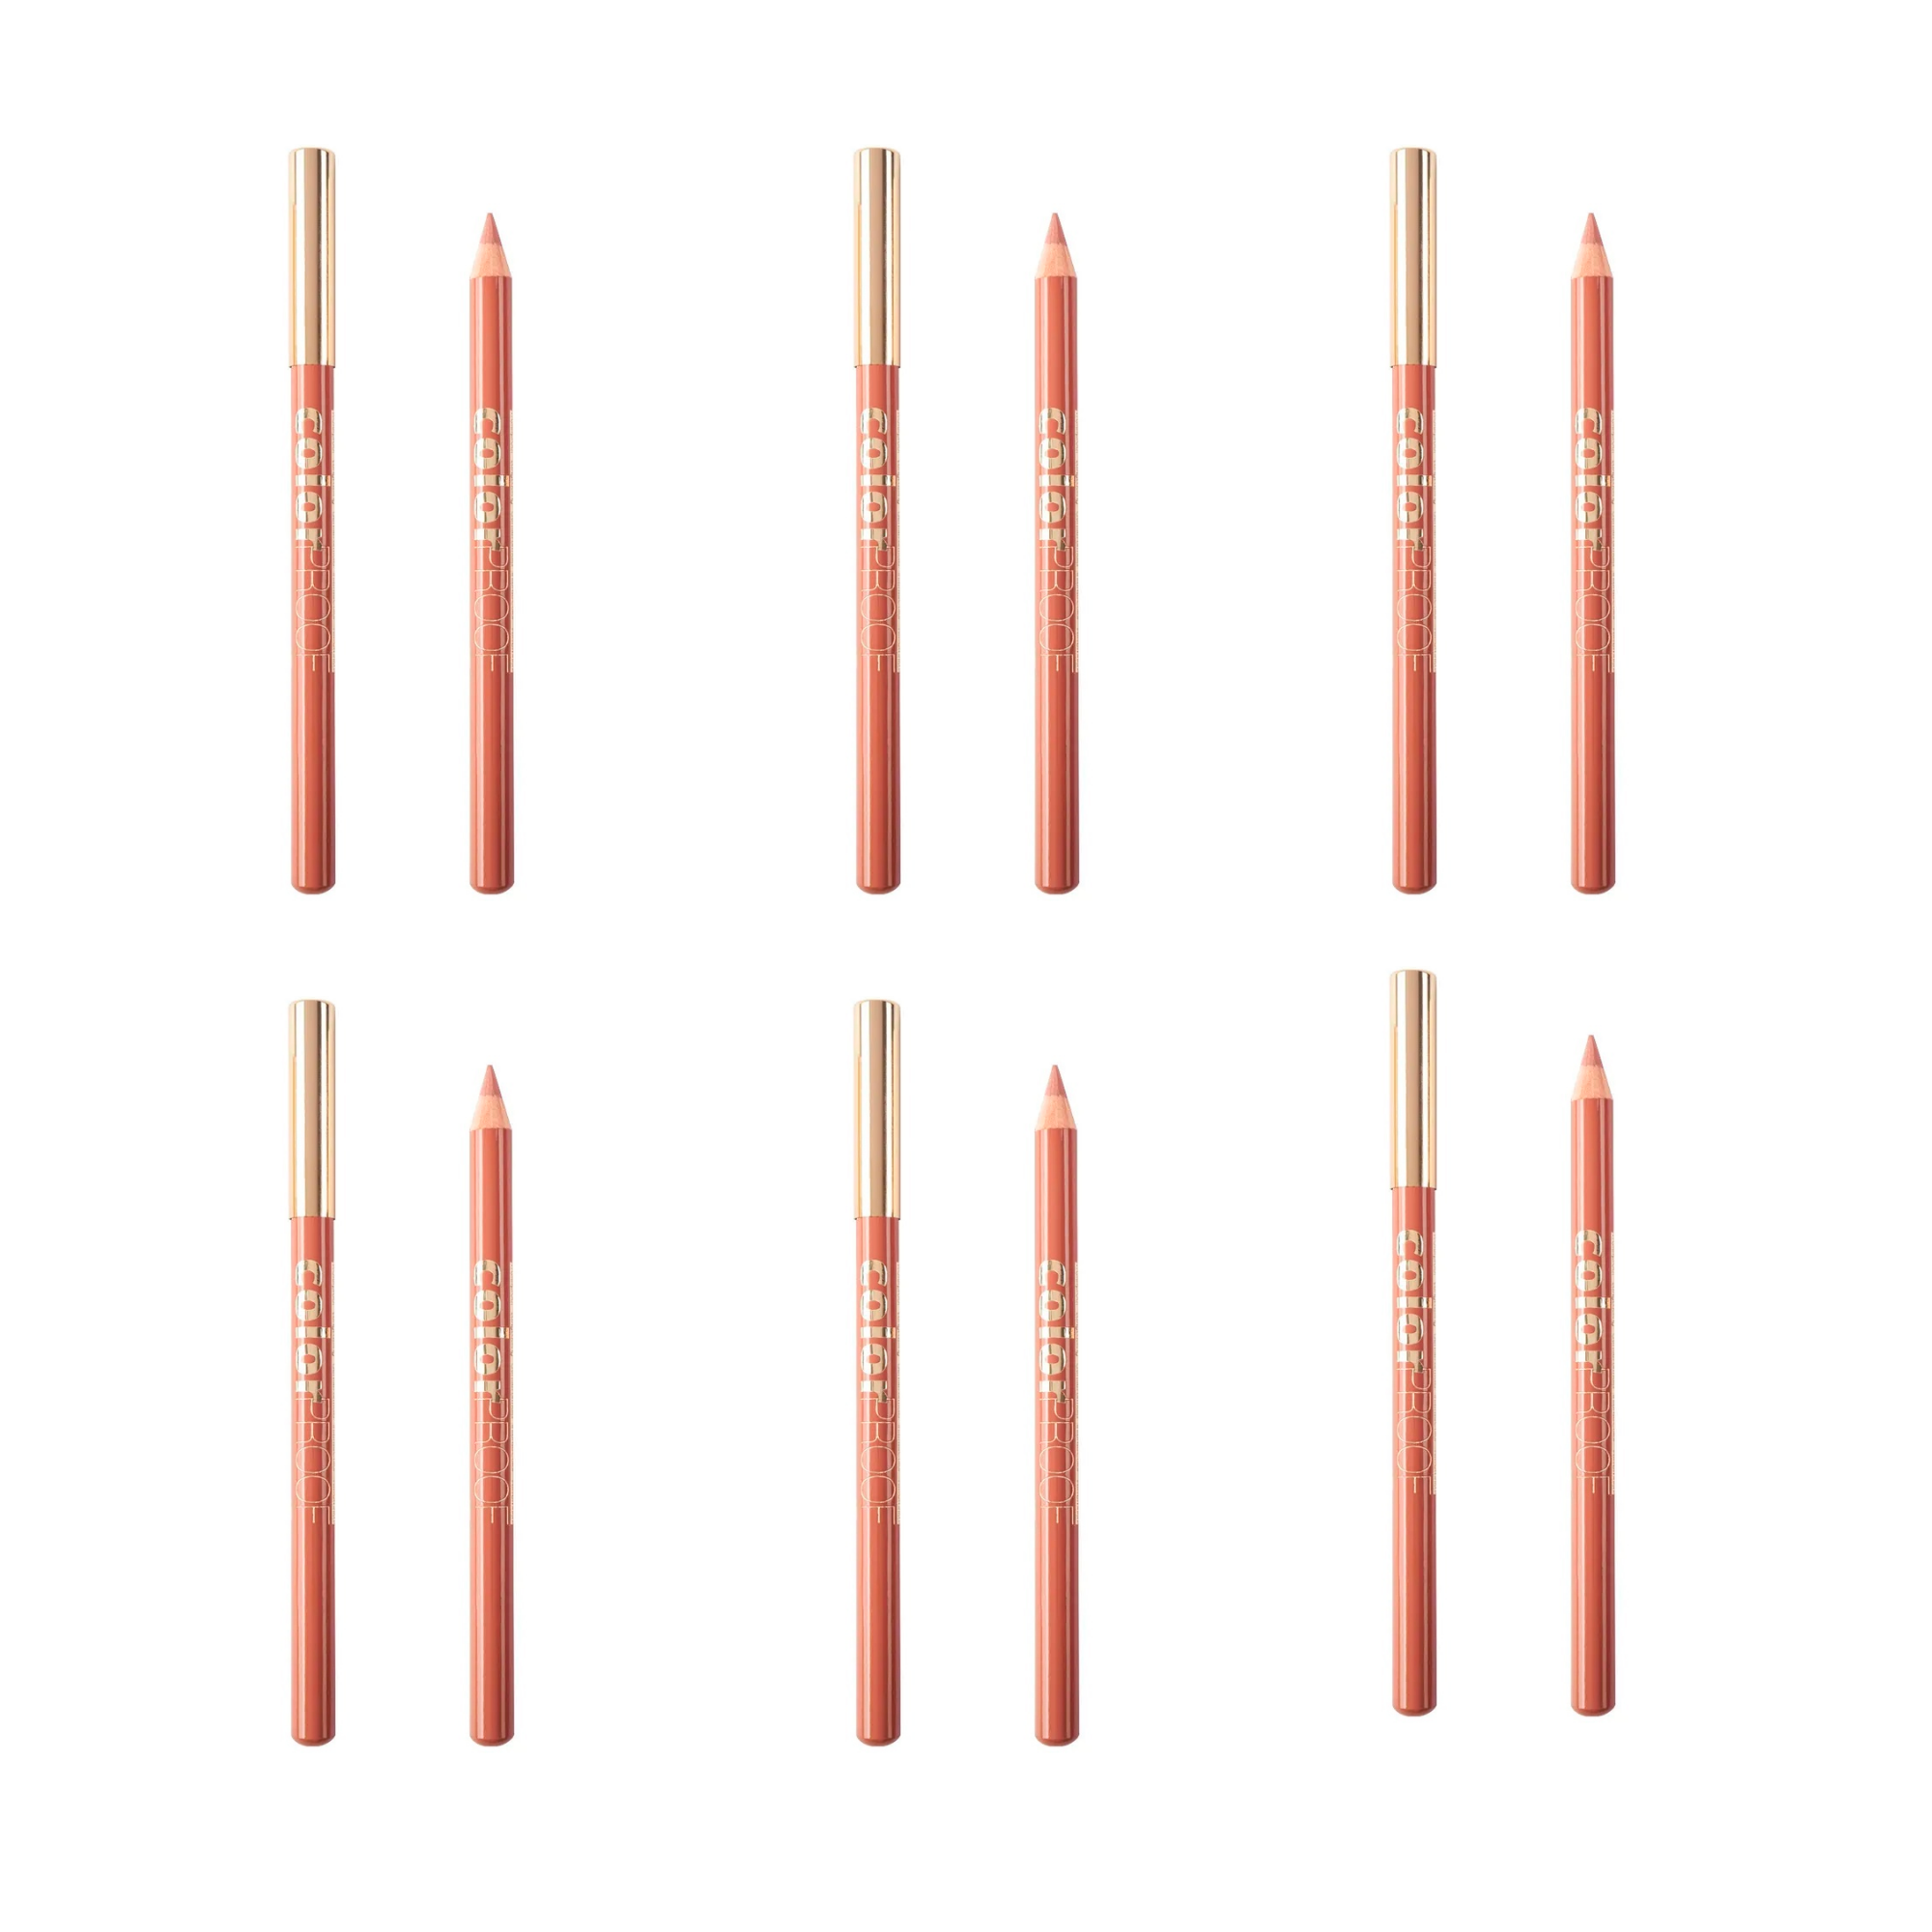 Карандаш для губ Charme тон 433 Теплый розовый натуральный6 шт карандаш для век charme 201 угольный3 шт